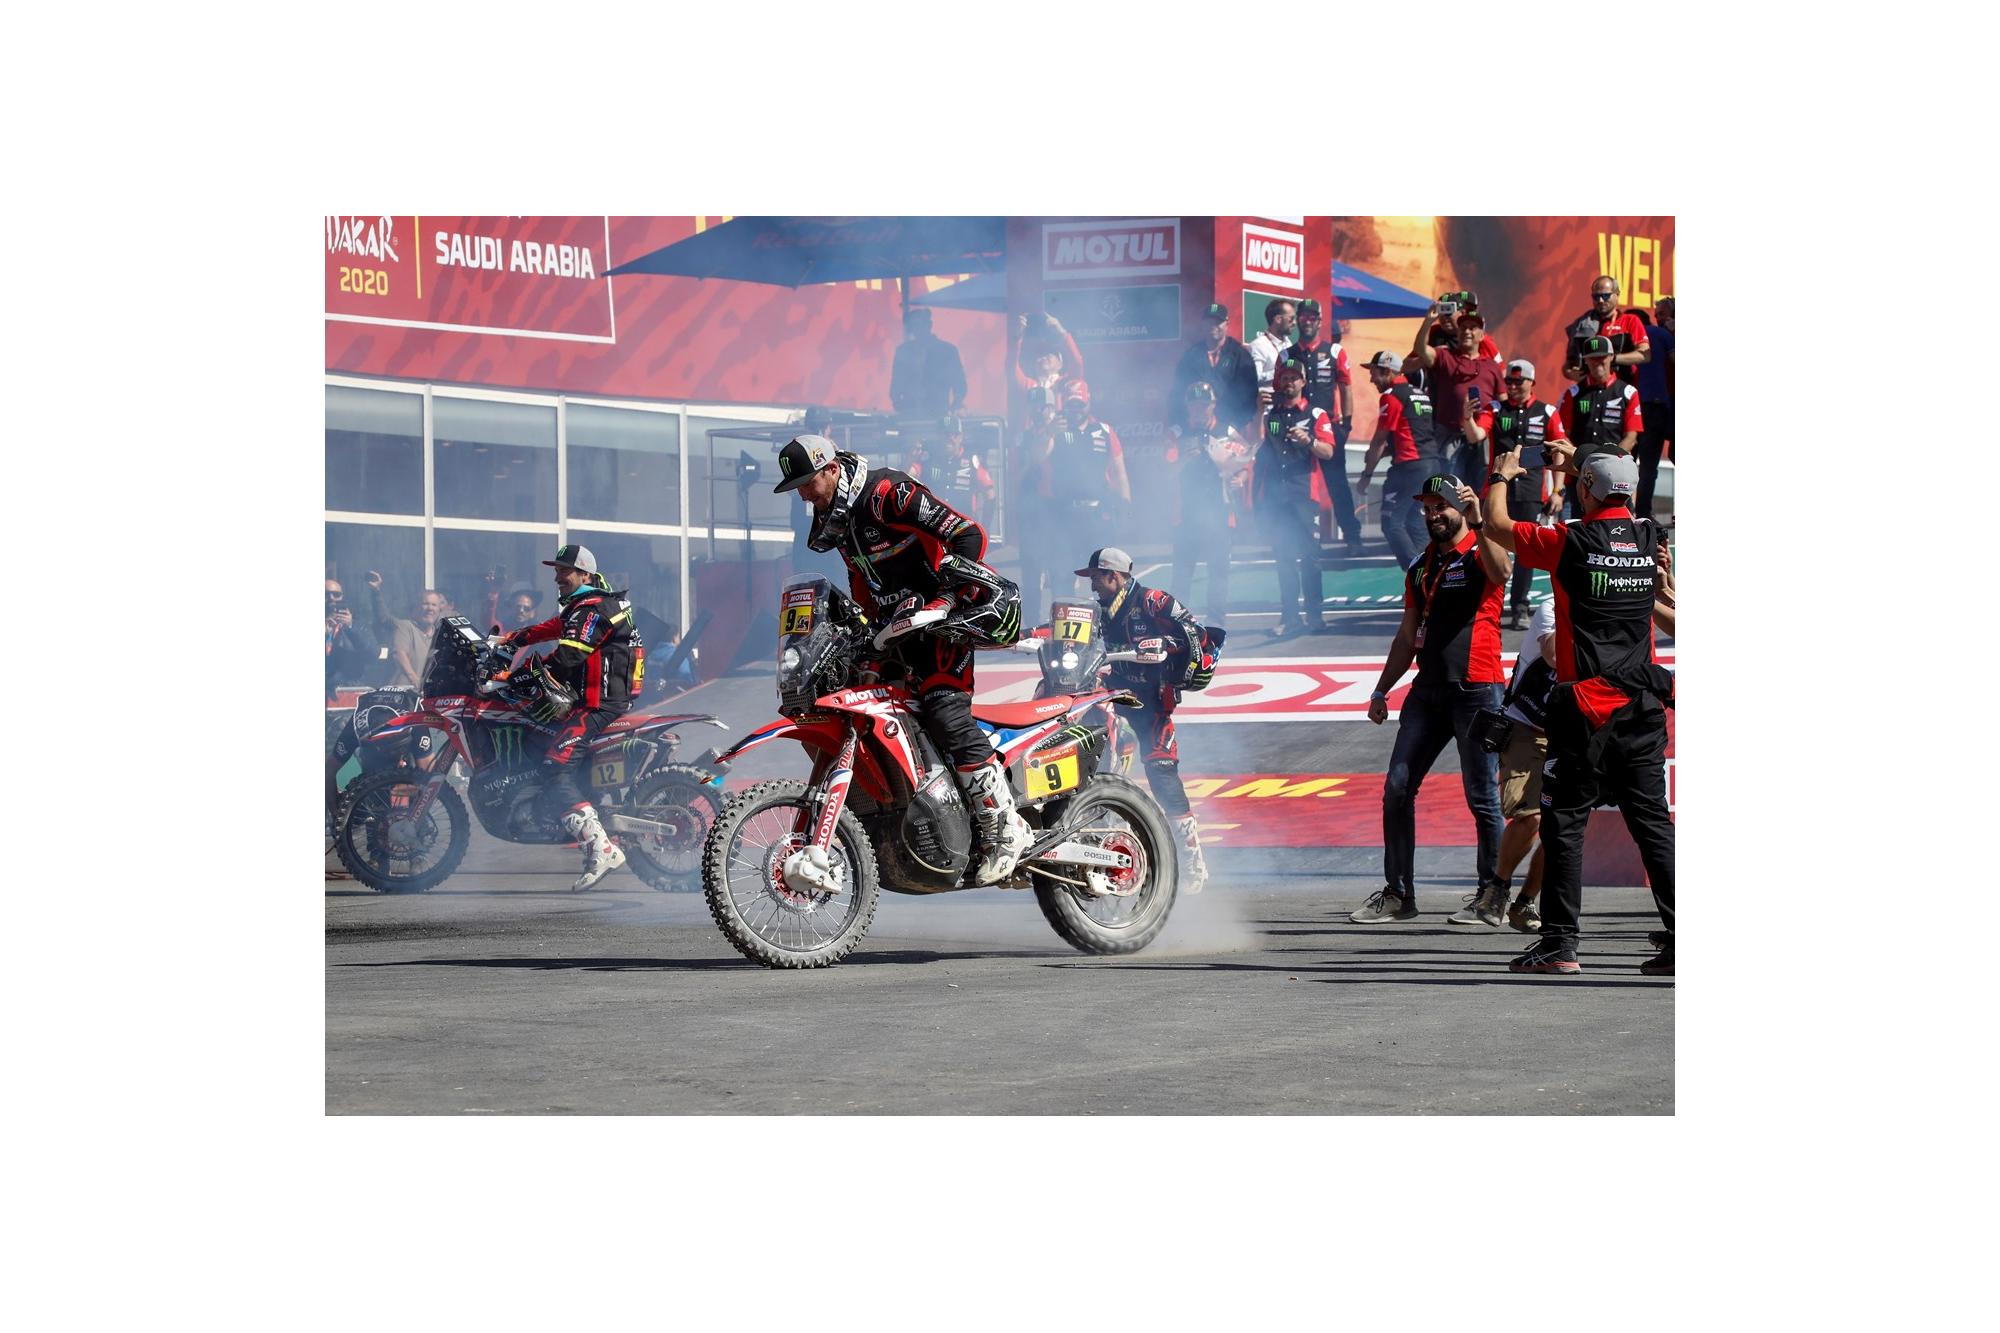 O Ricky Brabec και η Honda κατακτούν τη νίκη στο 2020 Dakar Rally